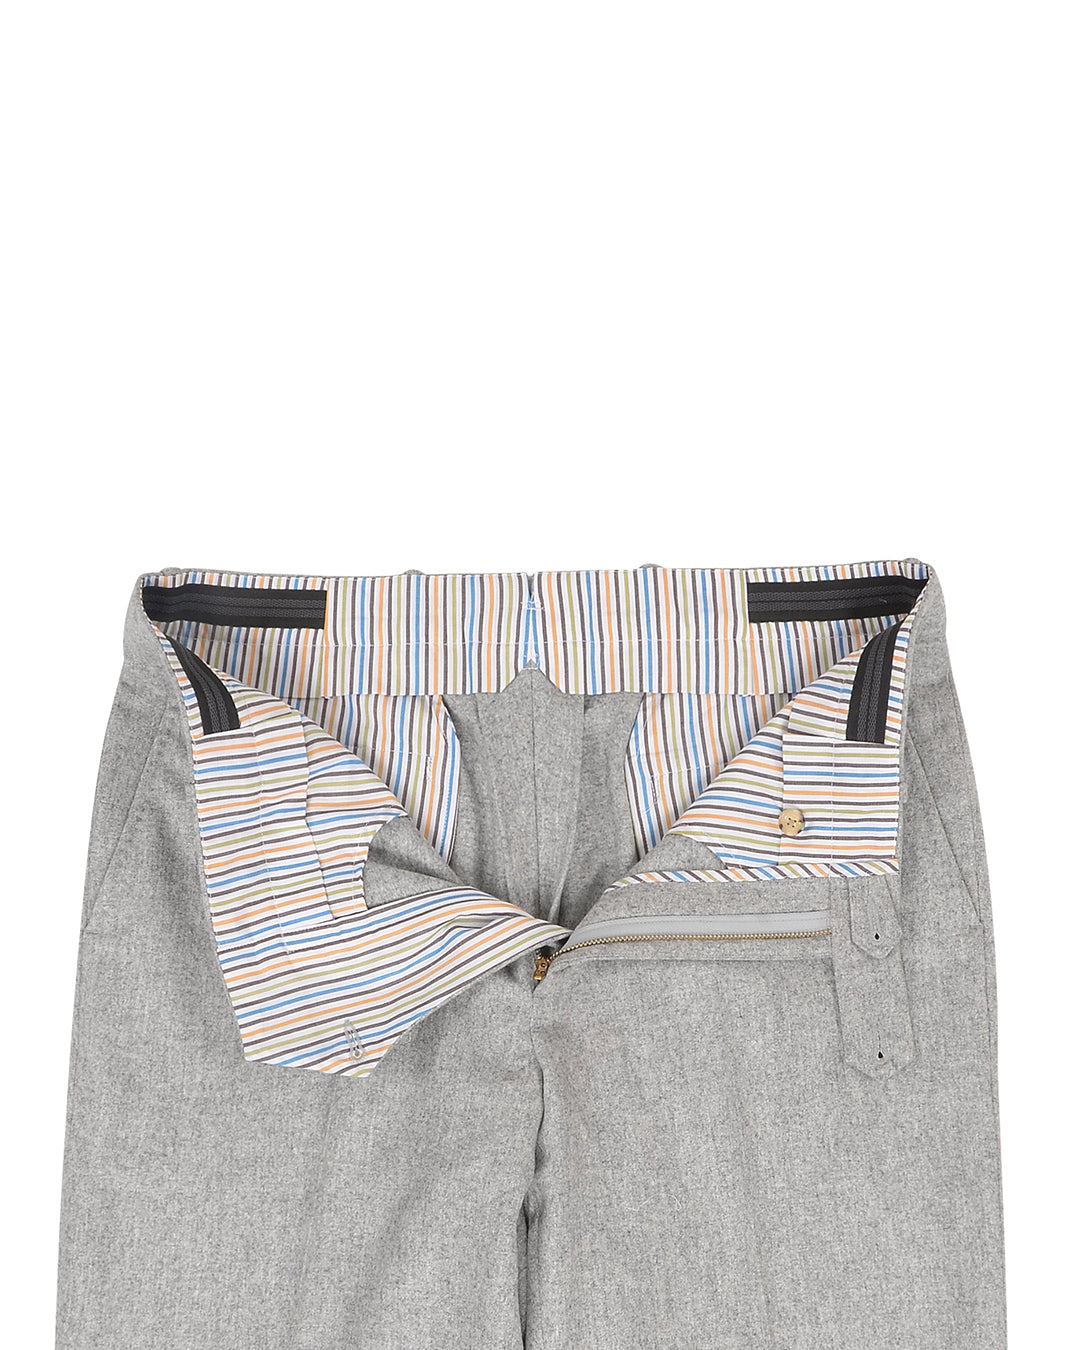 VBC 100% Wool: Ash Grey Flannel Dress Pant